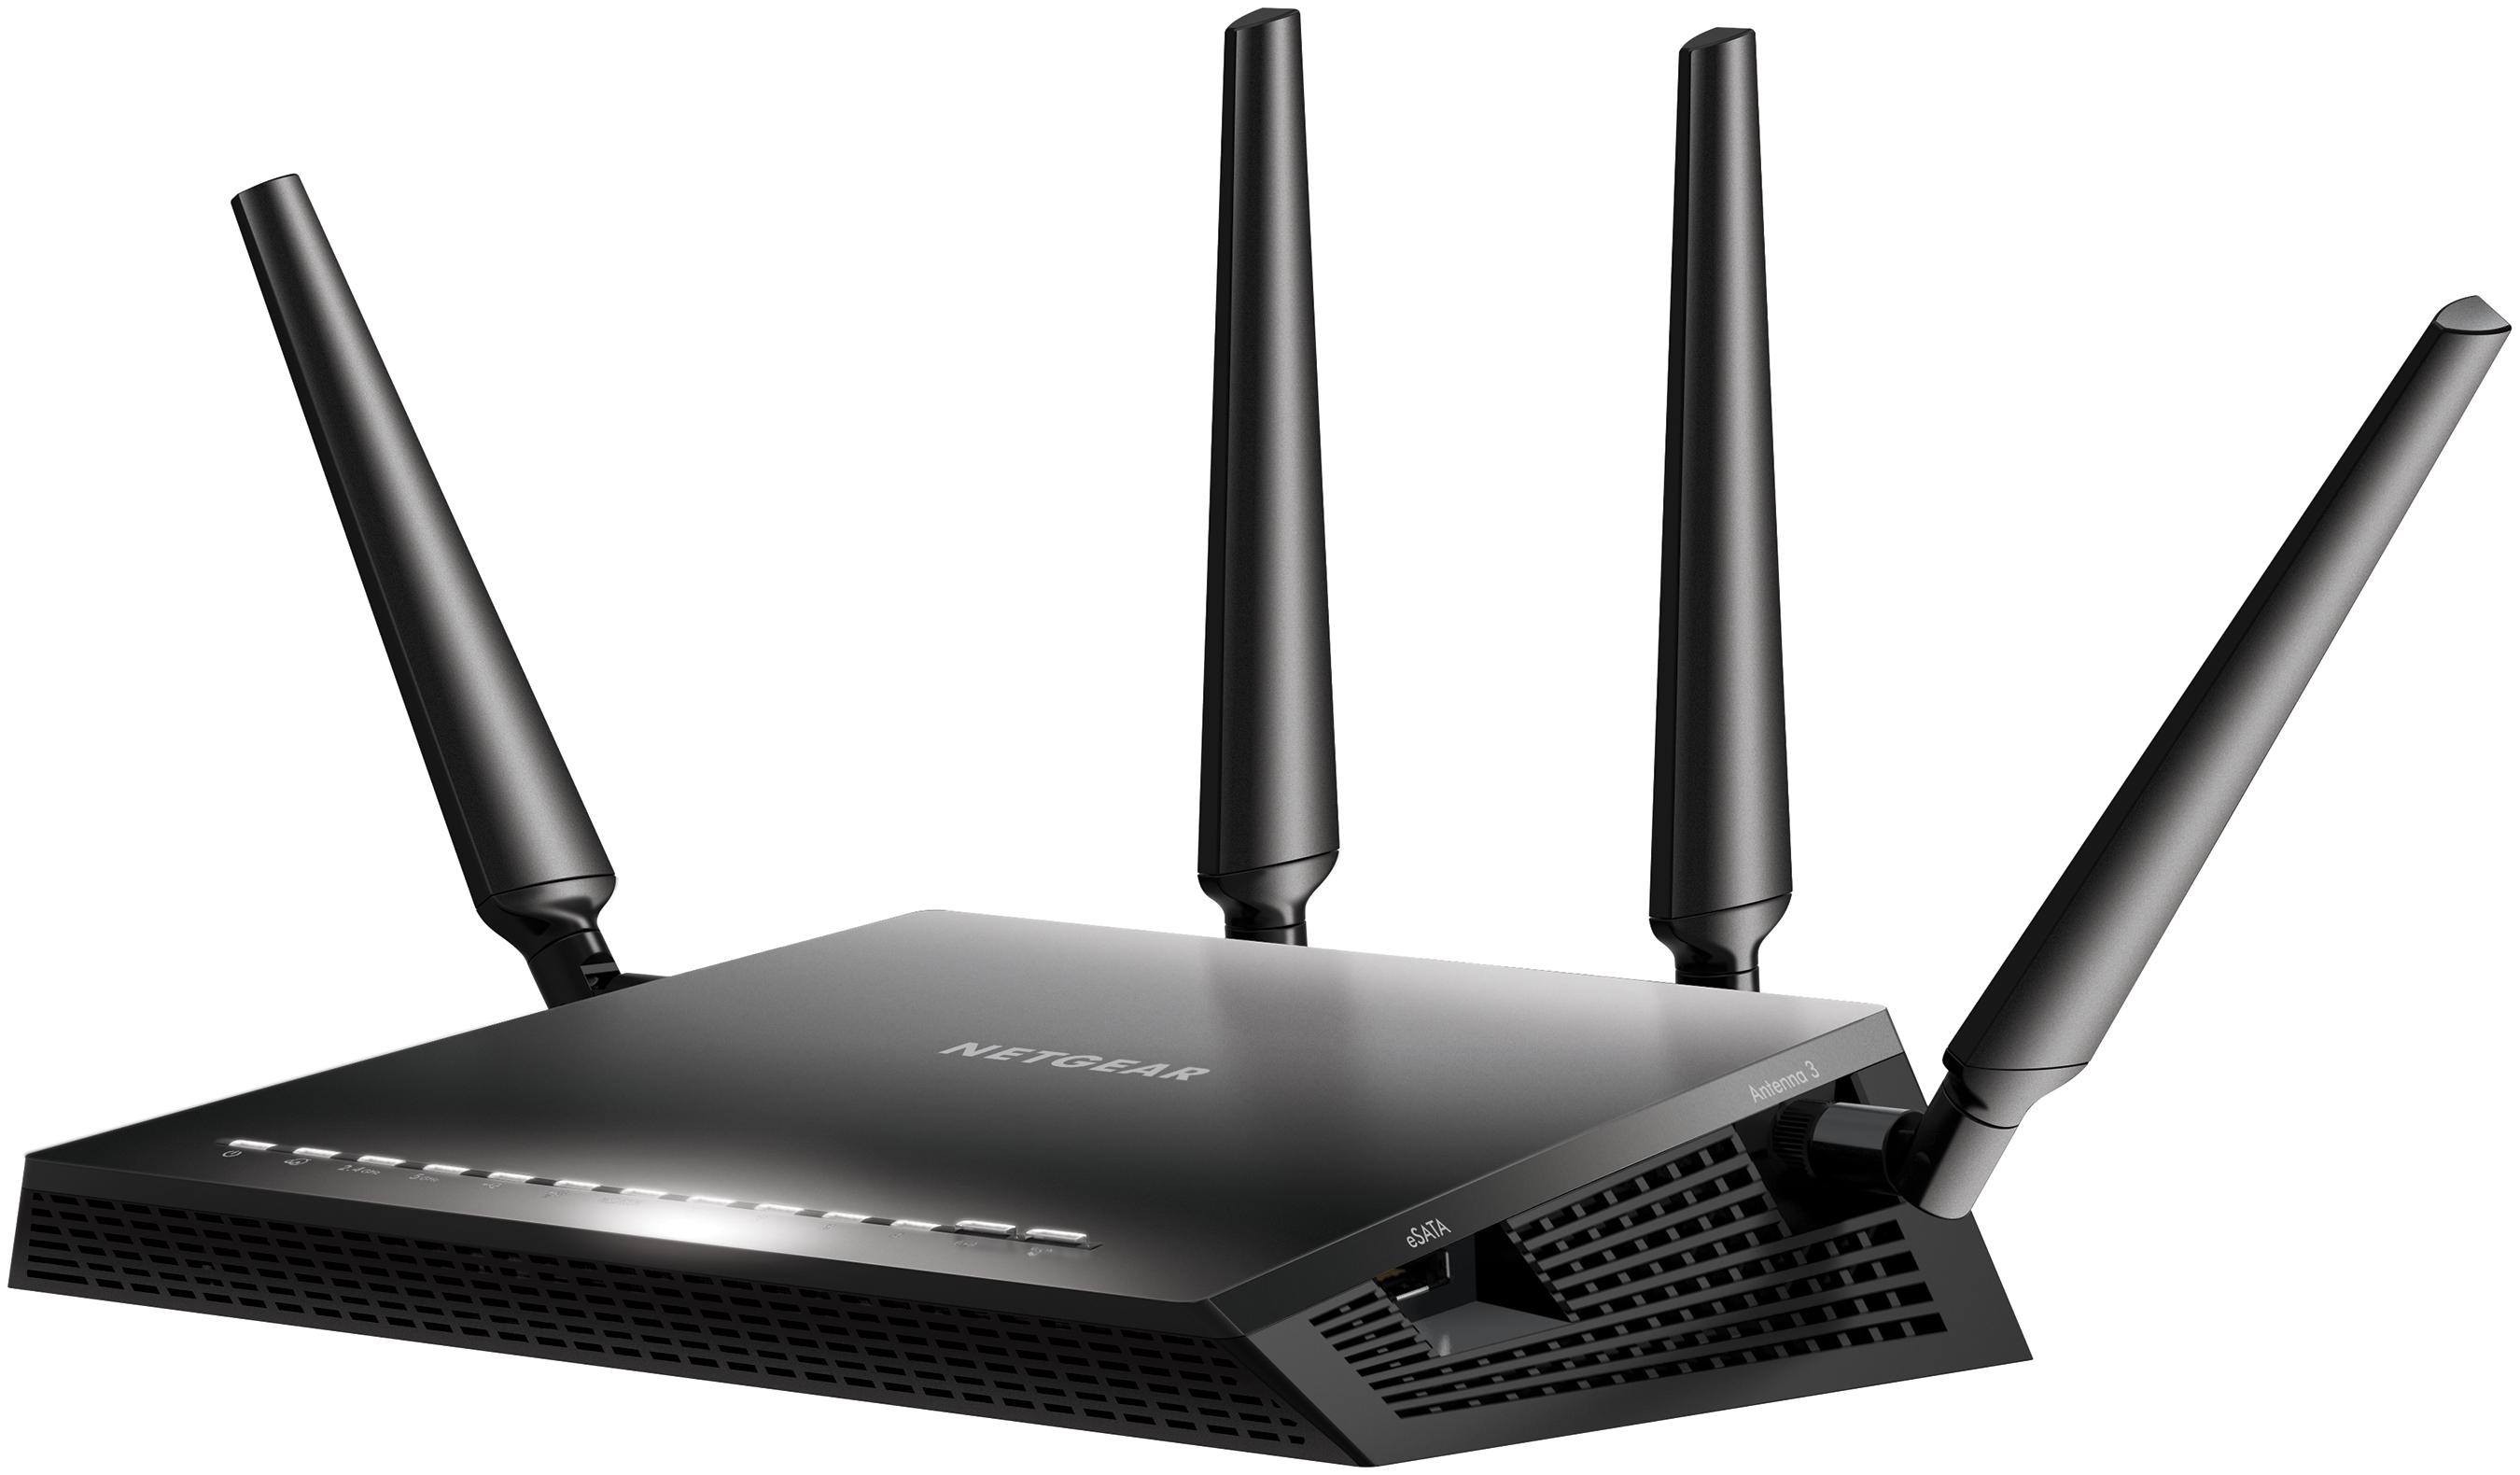 CES 2016: Netgear Unveils New Lineup of WiFi Routers, Range Extenders